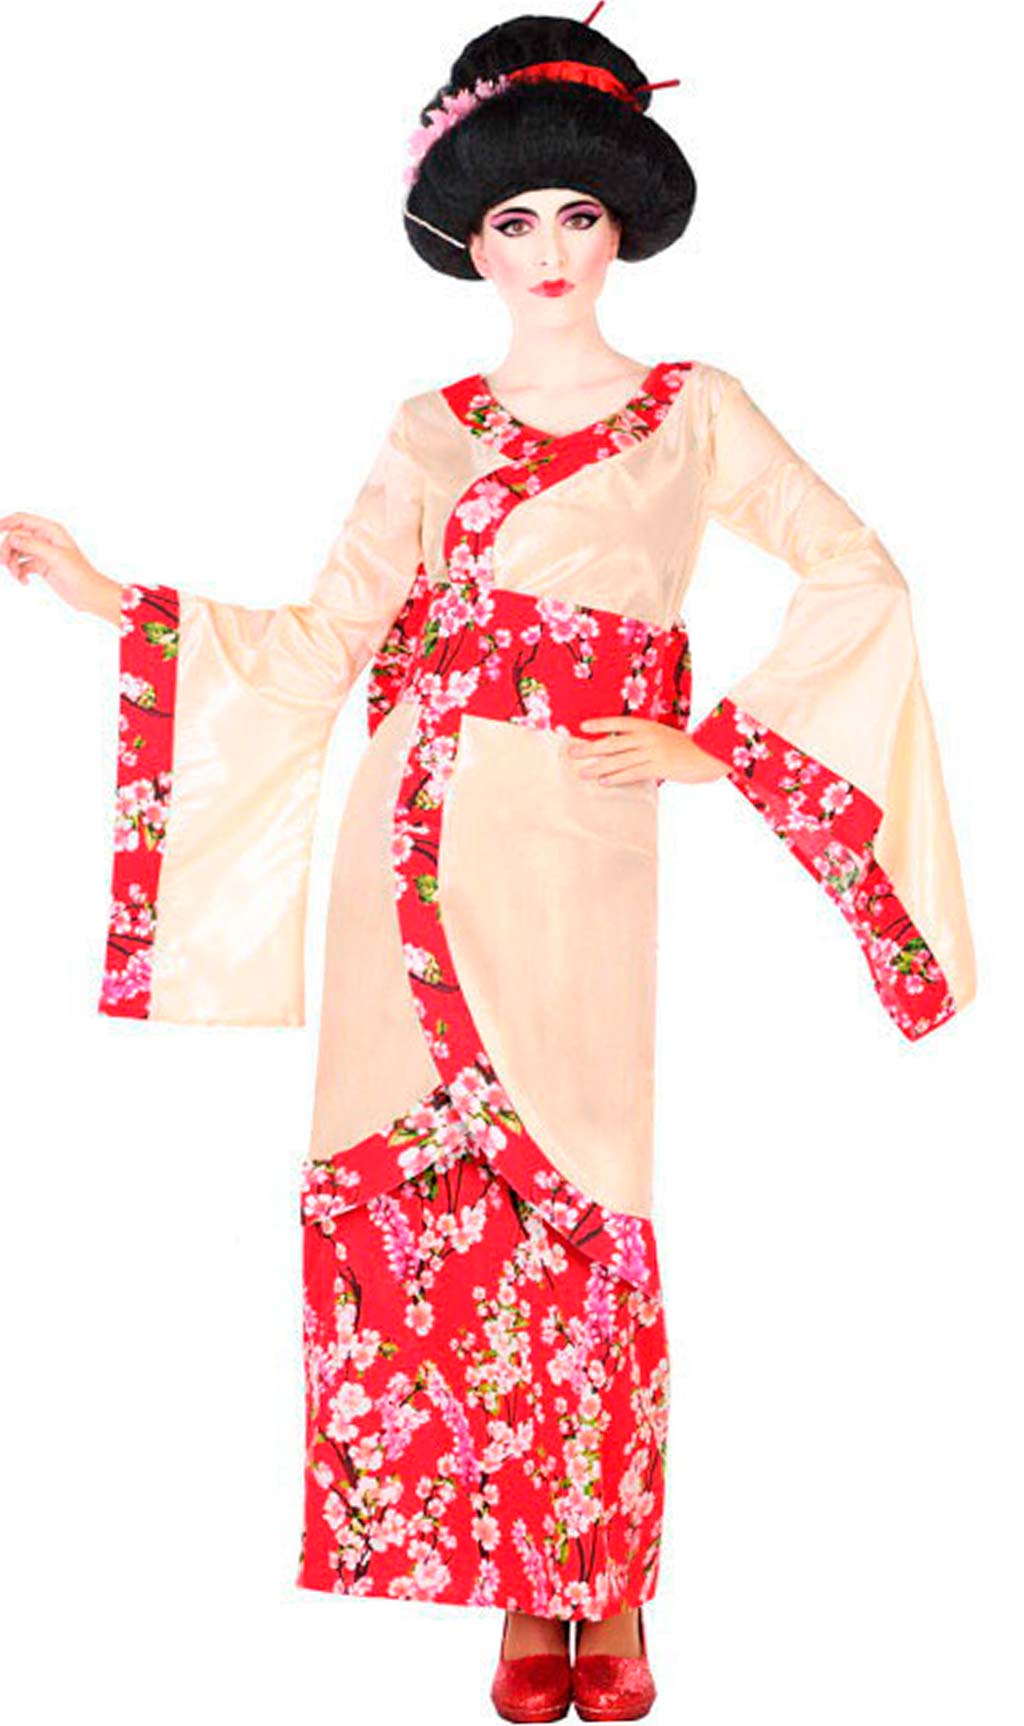 Disfraz geisha adulto deluxe 